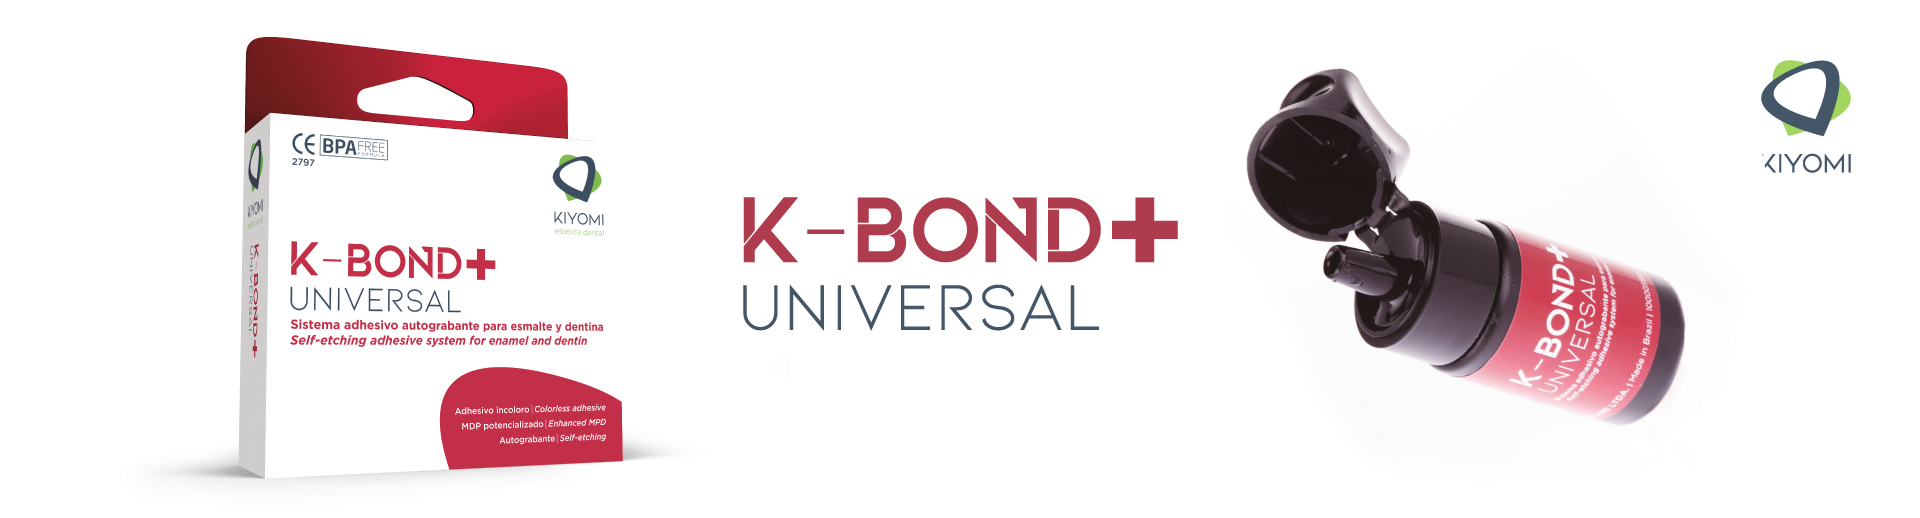 adhesivo k-bond+ adhesive blog banner